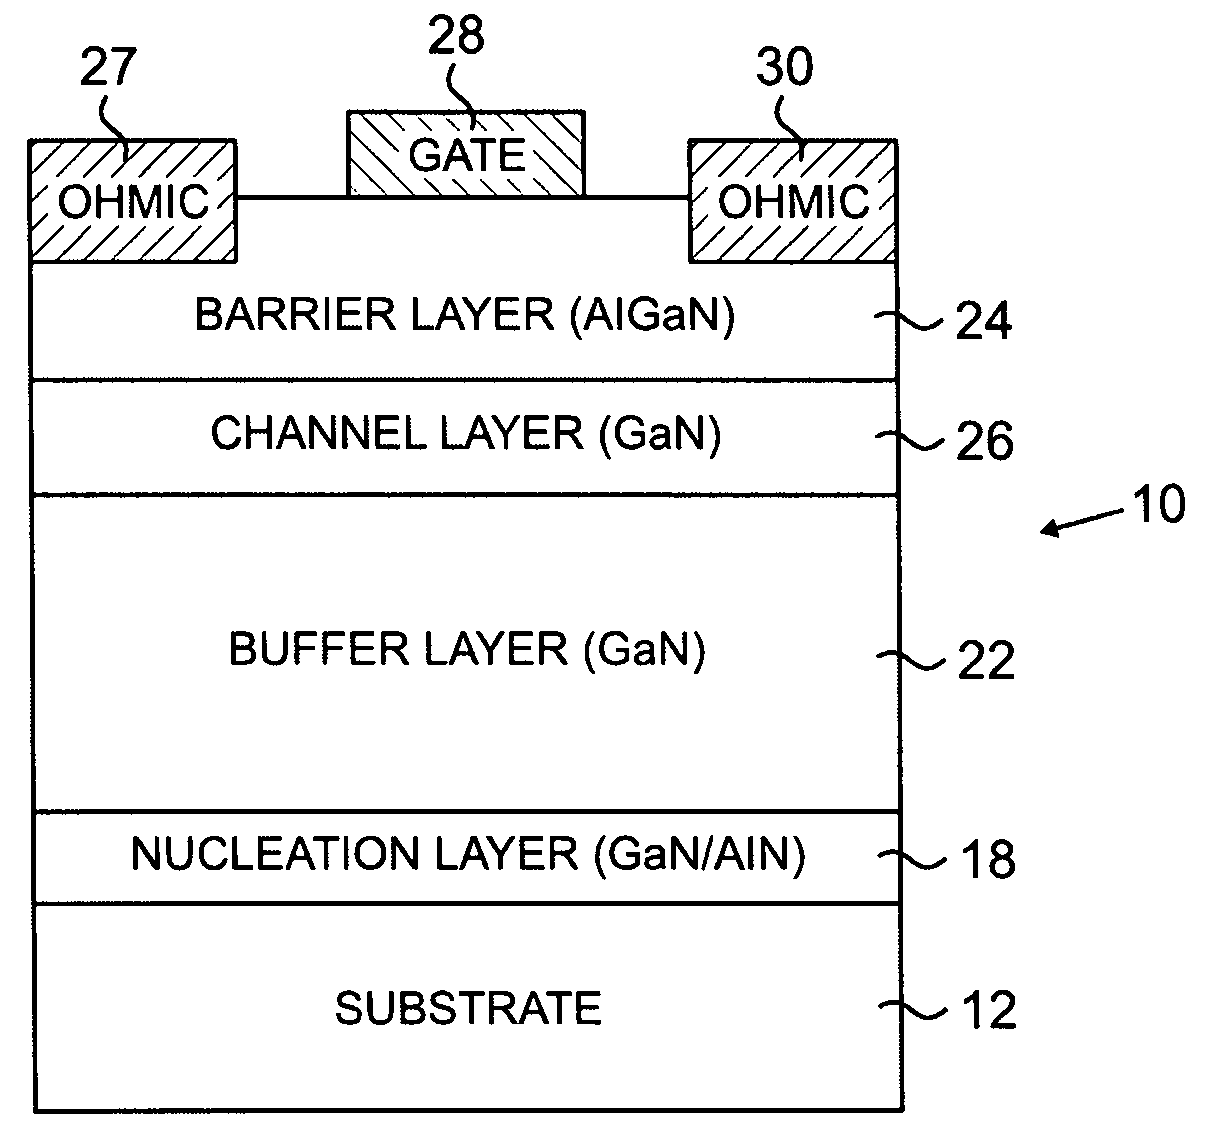 Cascode circuit employing a depletion-mode, GaN-based FET